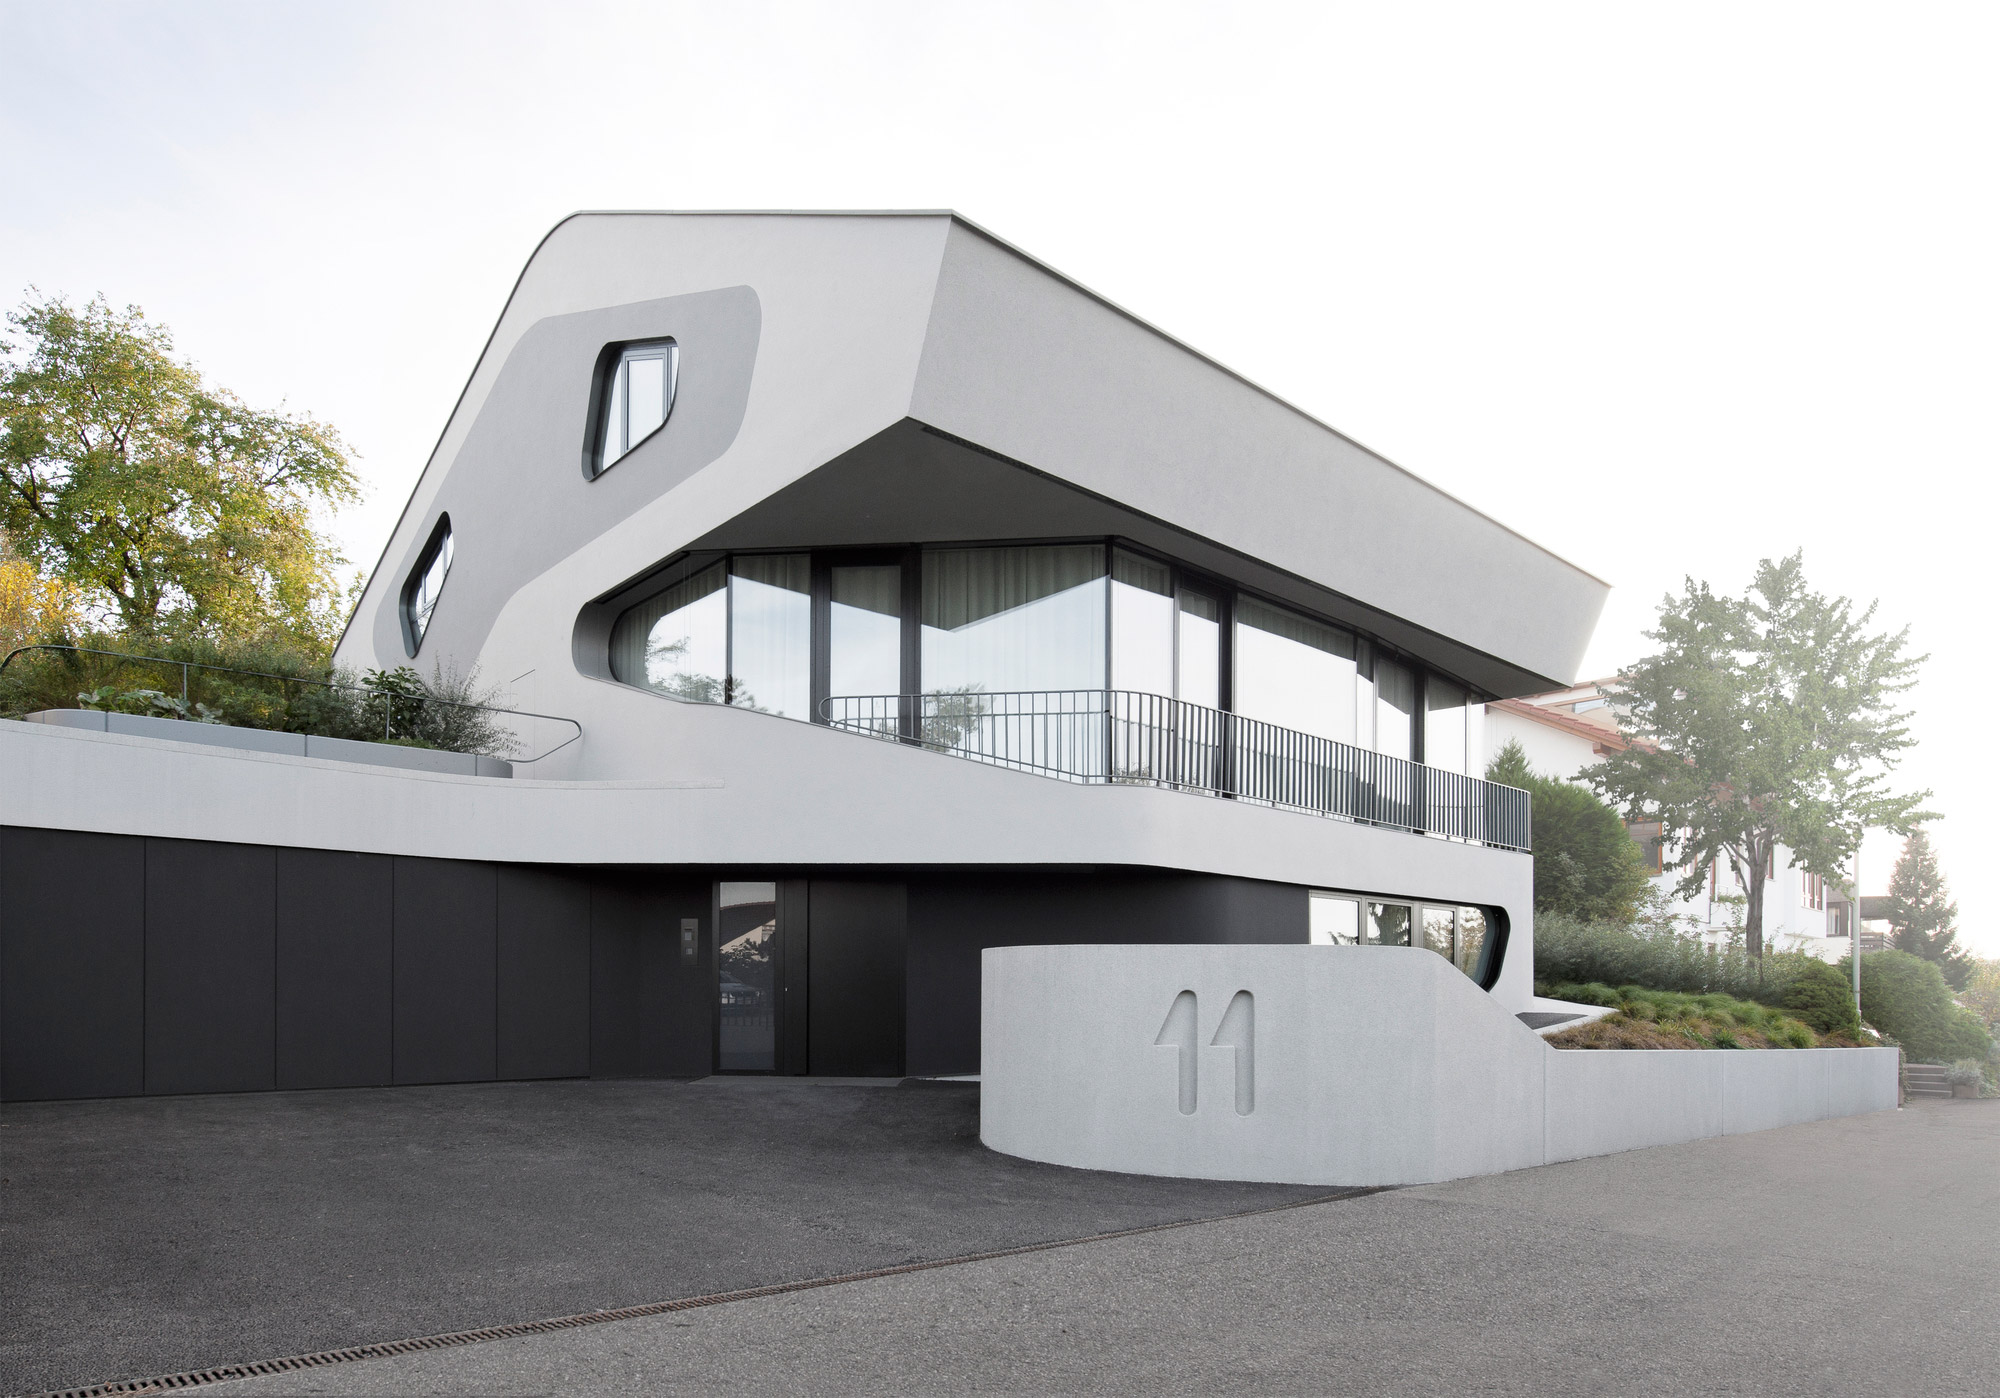 OLS House / J. MAYER H Architects